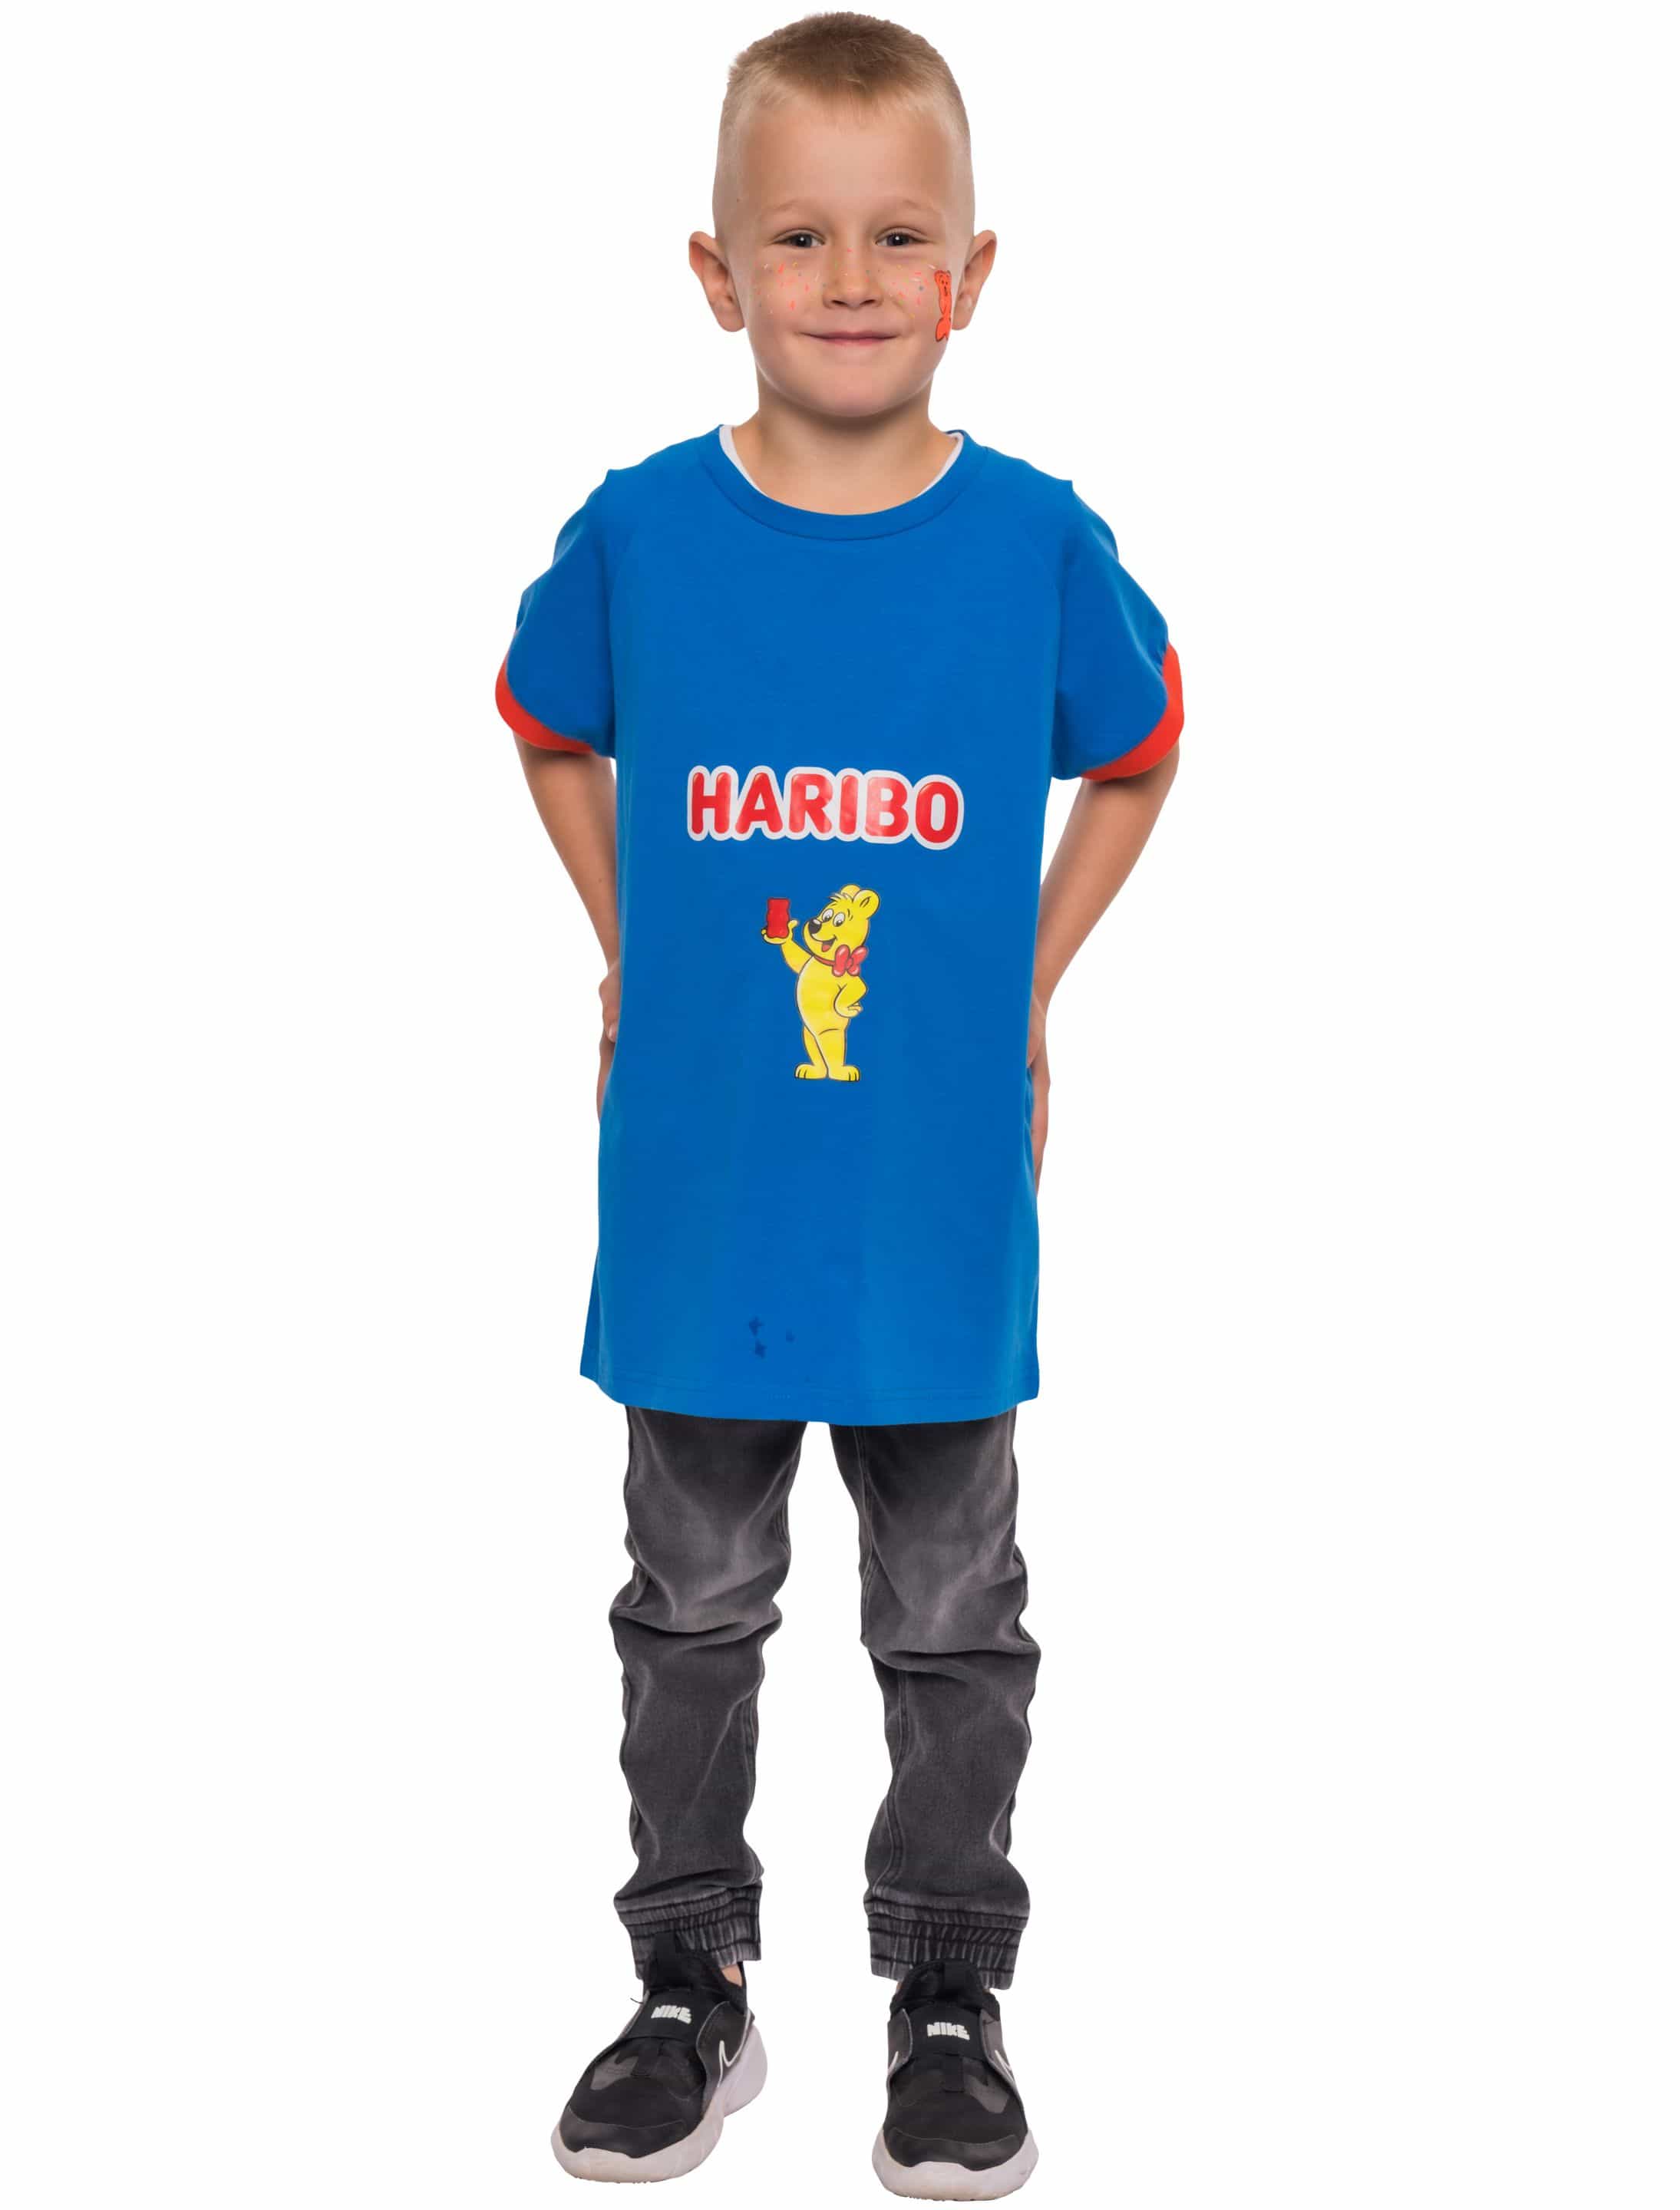 T-Shirt HARIBO Goldbären blau 164